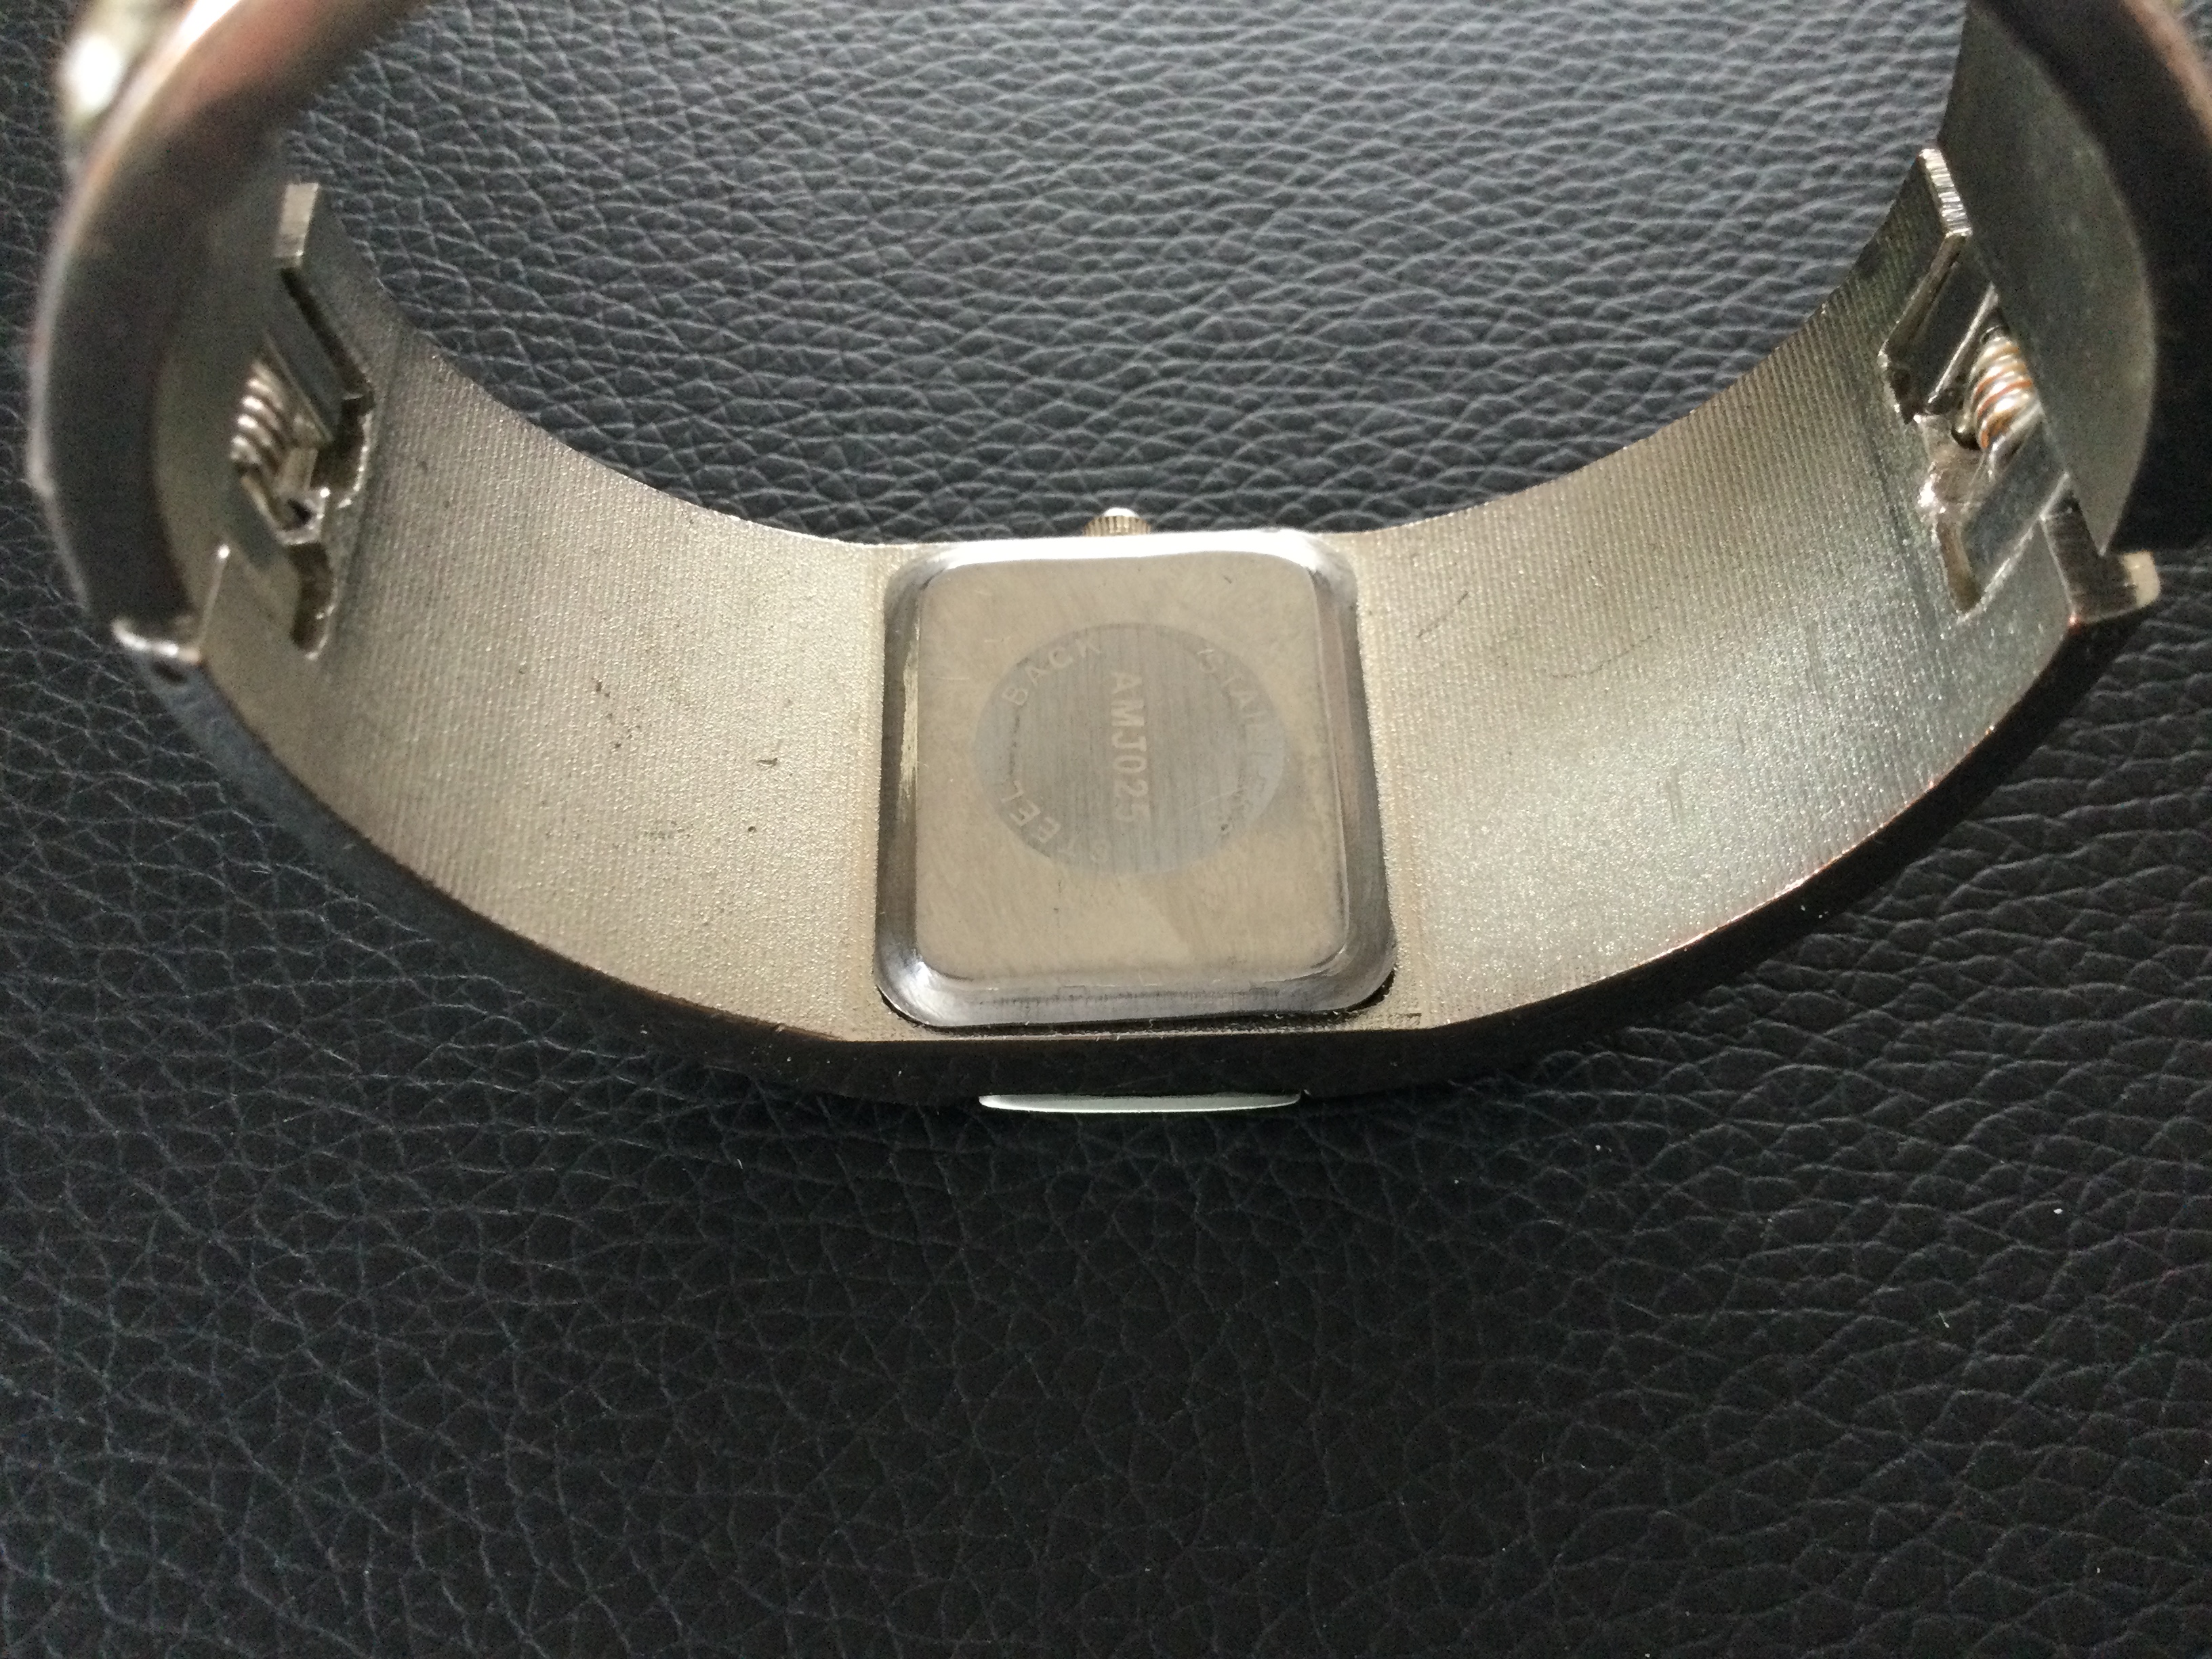 Cuba Ladies Diamante Wristwatch with Sprung Adjusted Bracelet (GS 123) - Image 4 of 5